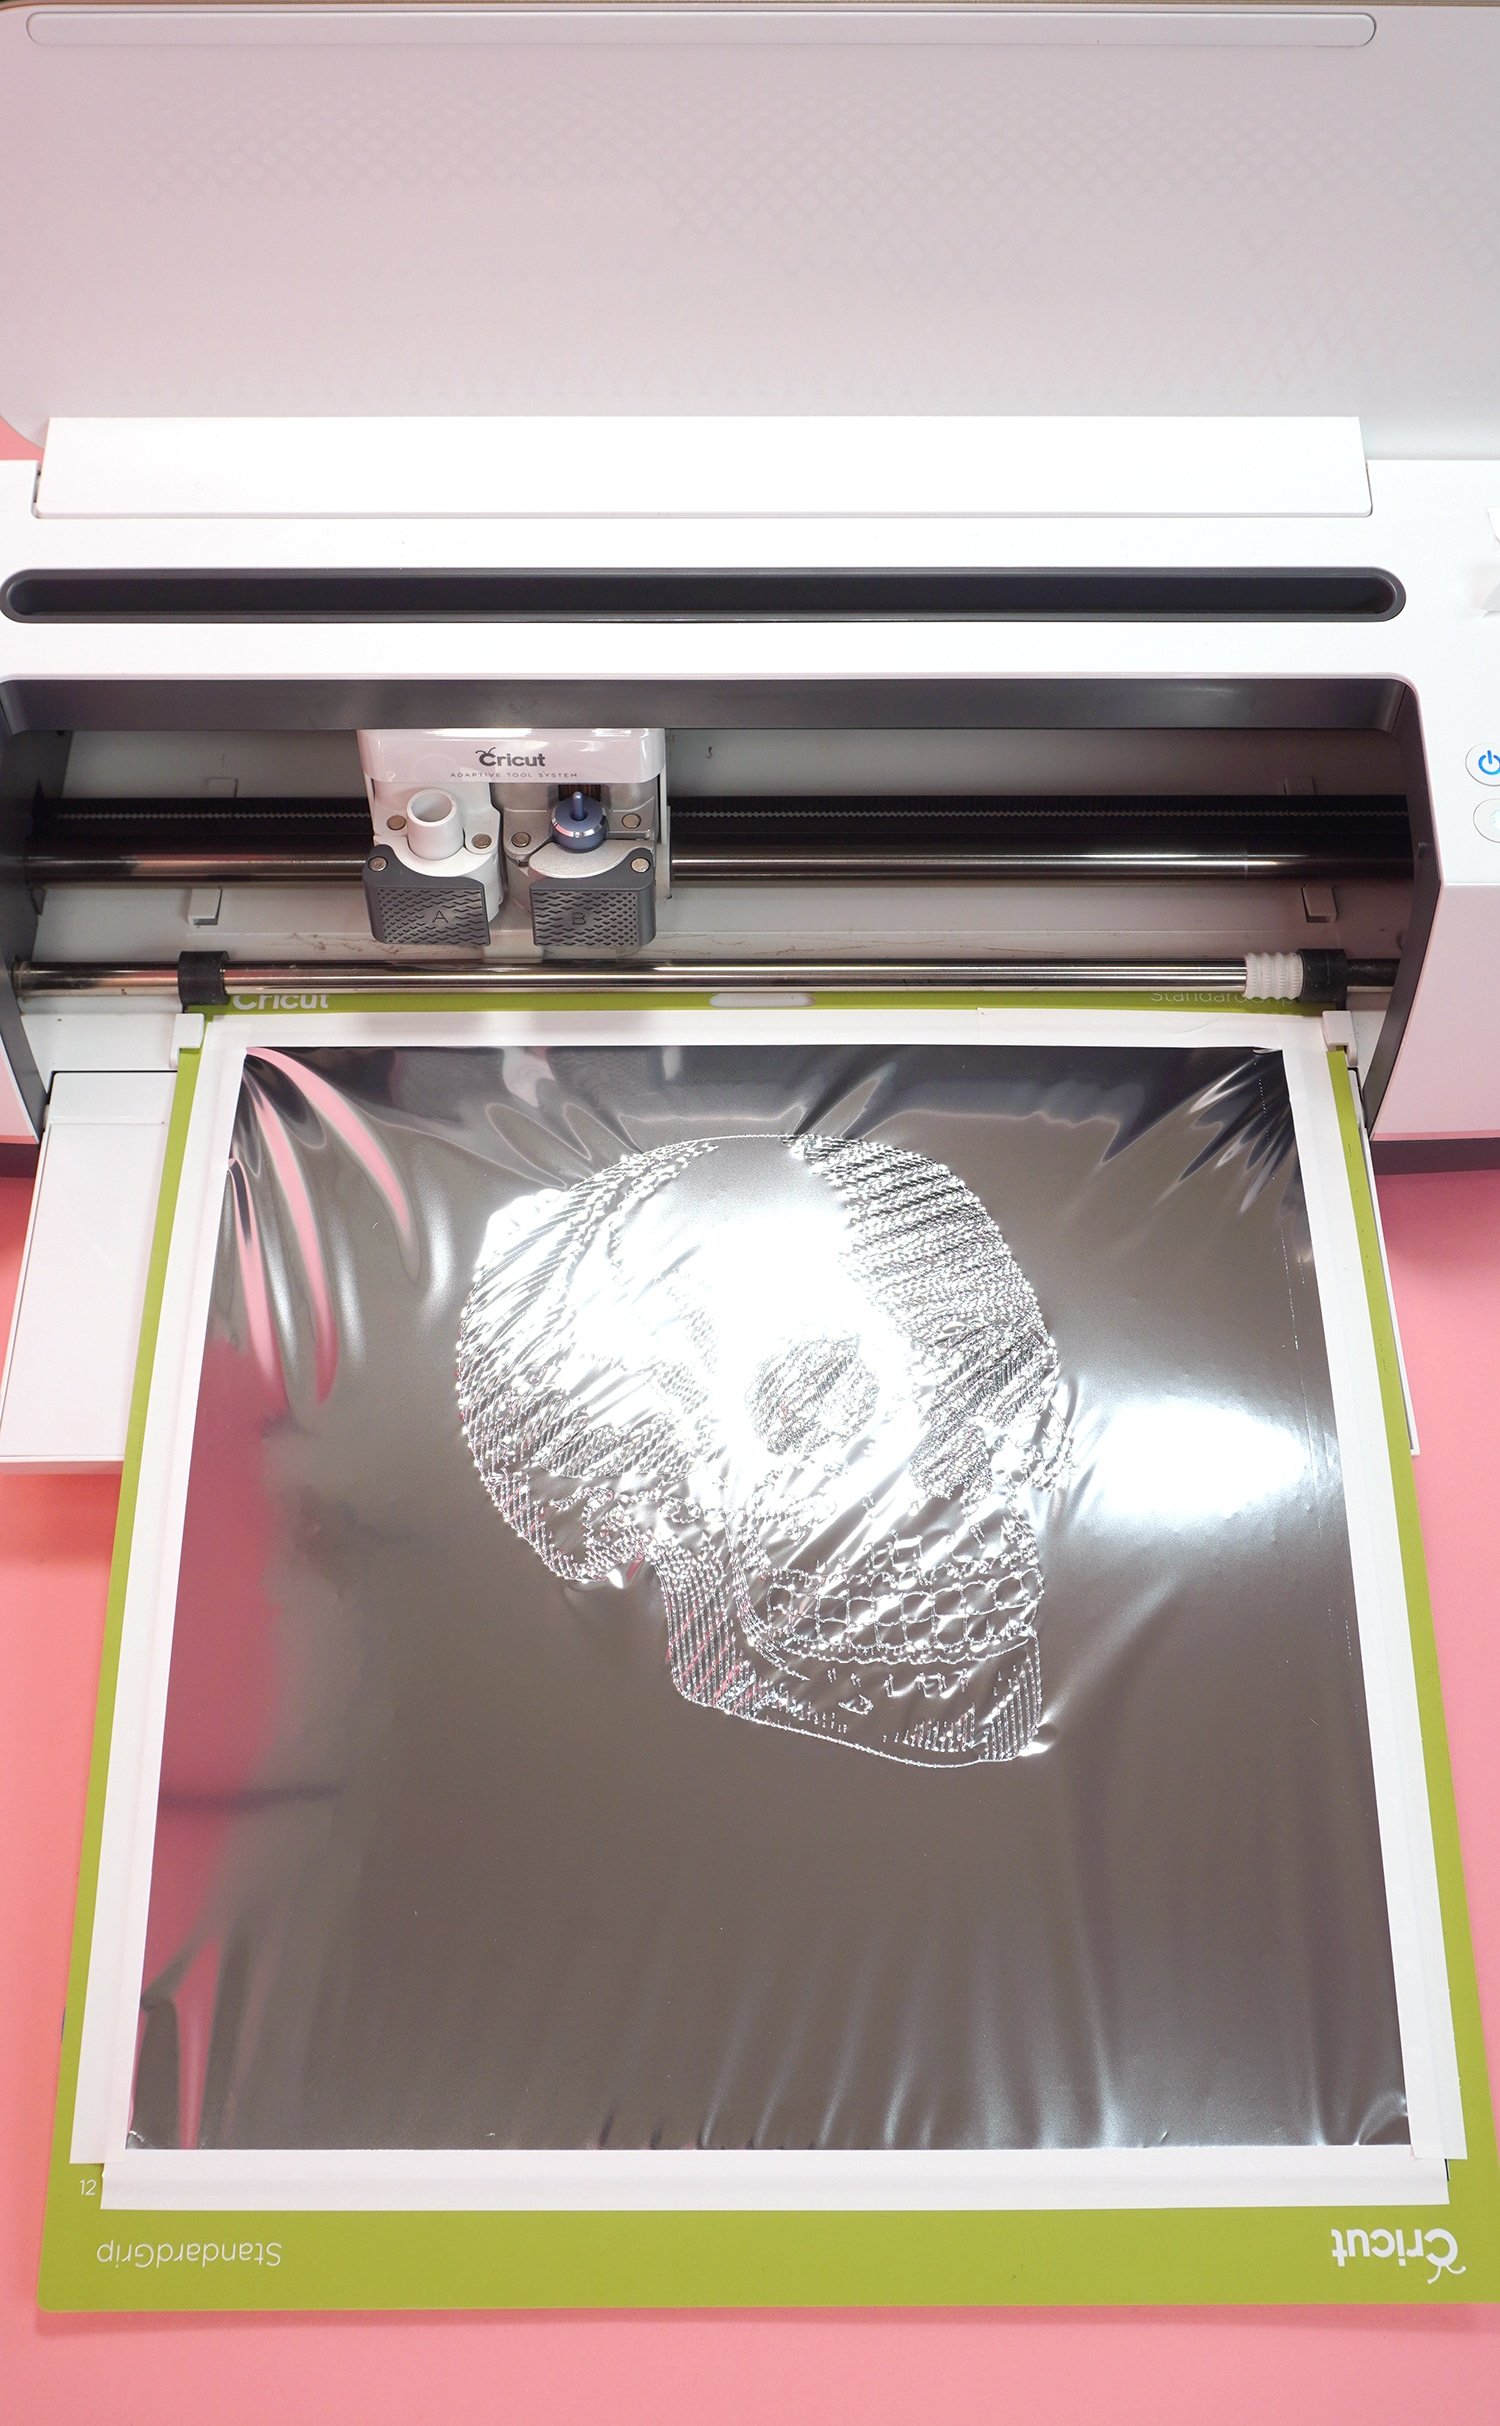 Silver foil with skull design on Cricut mat in Cricut Maker machine